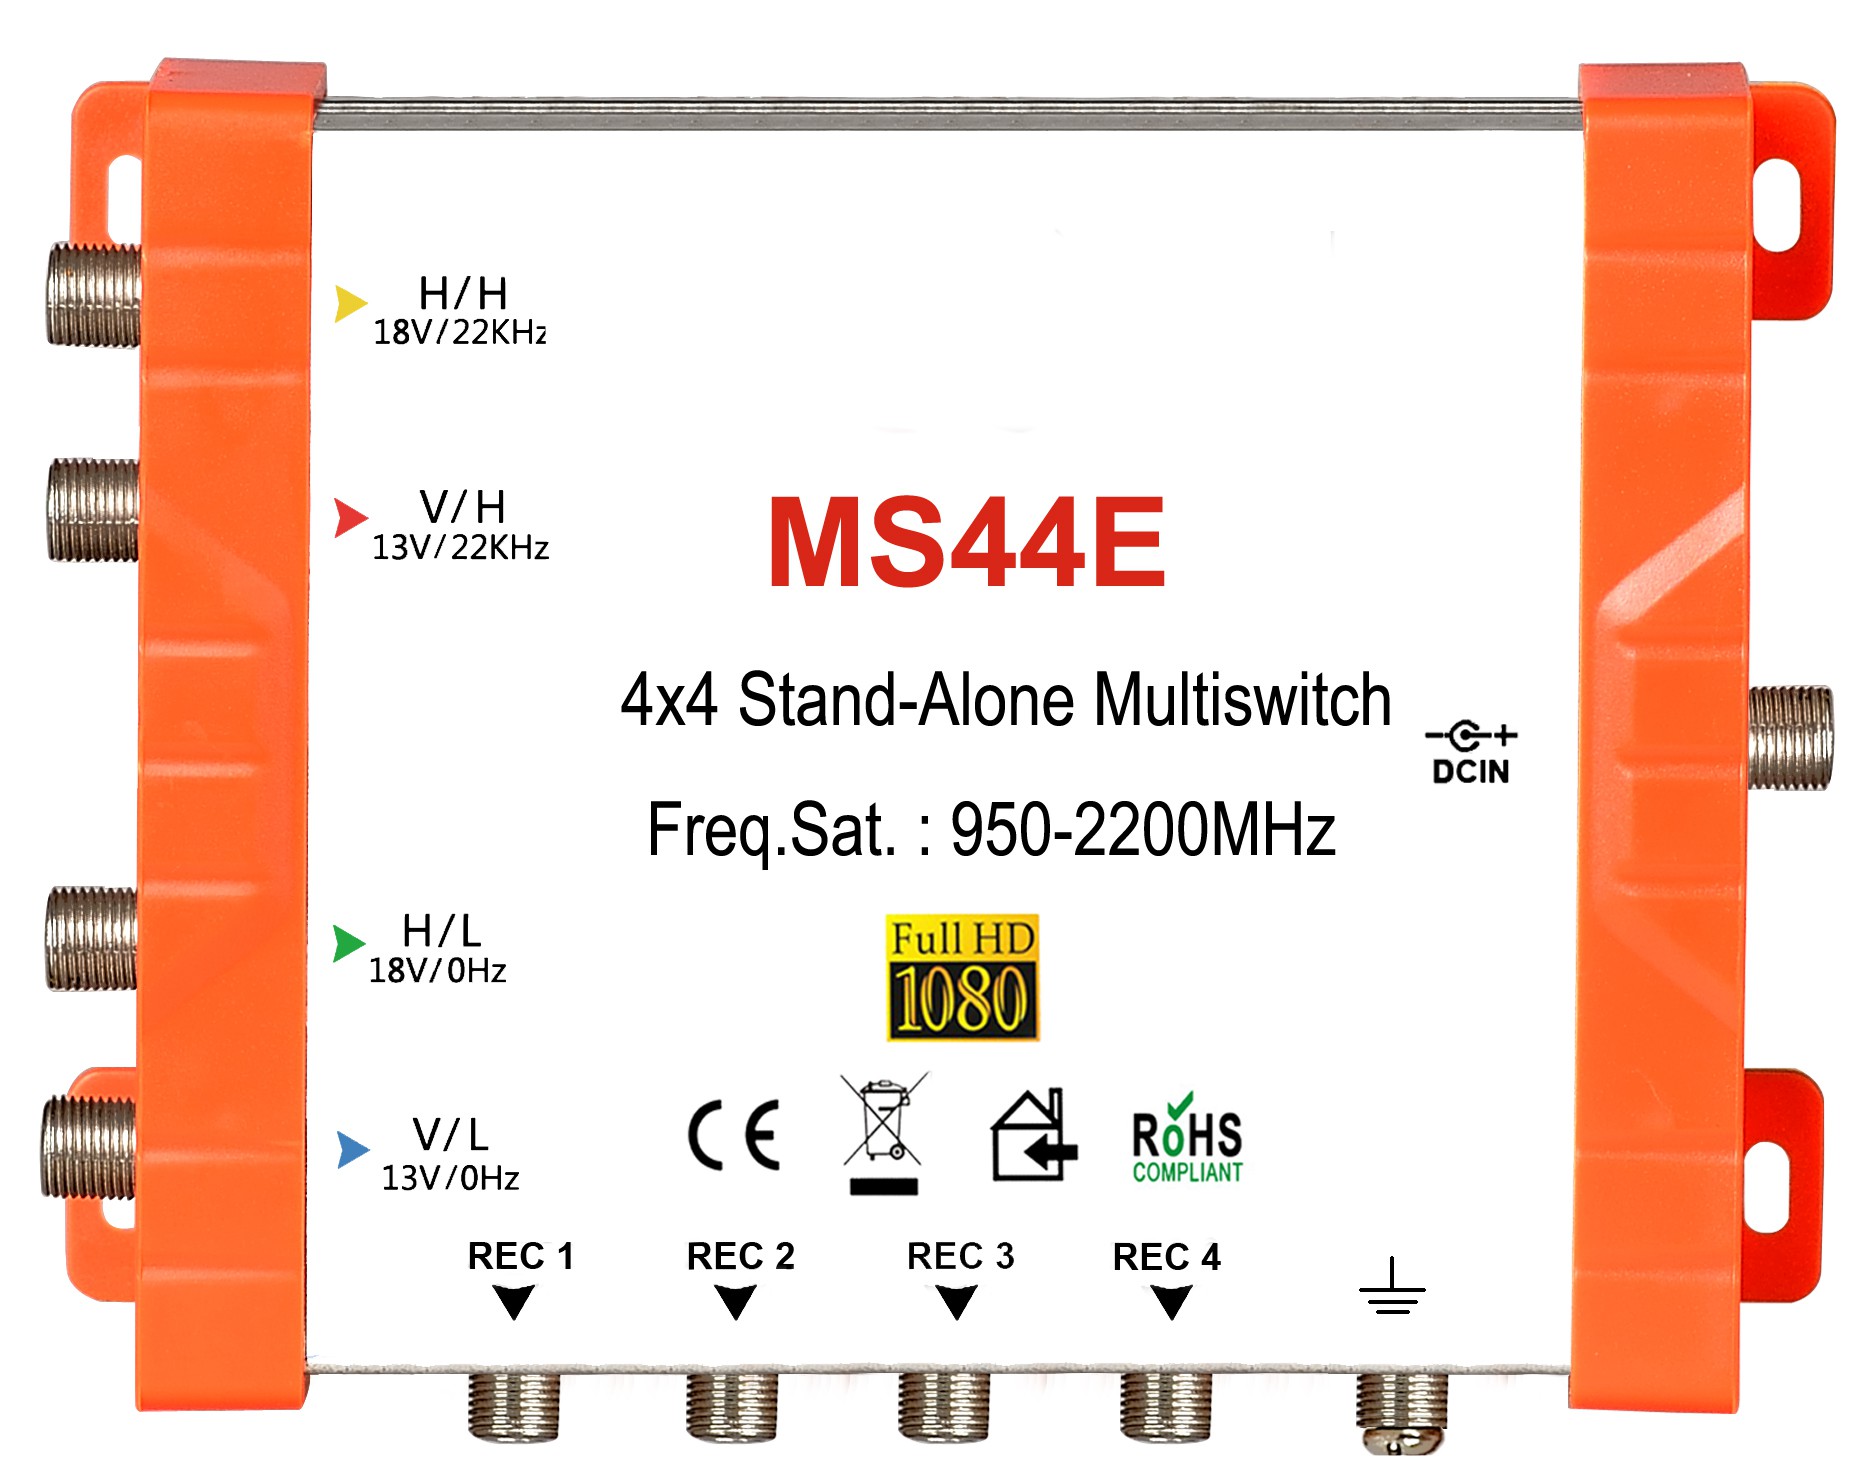 4x4 satellite multi-switch, Stand-Alone multiswitch